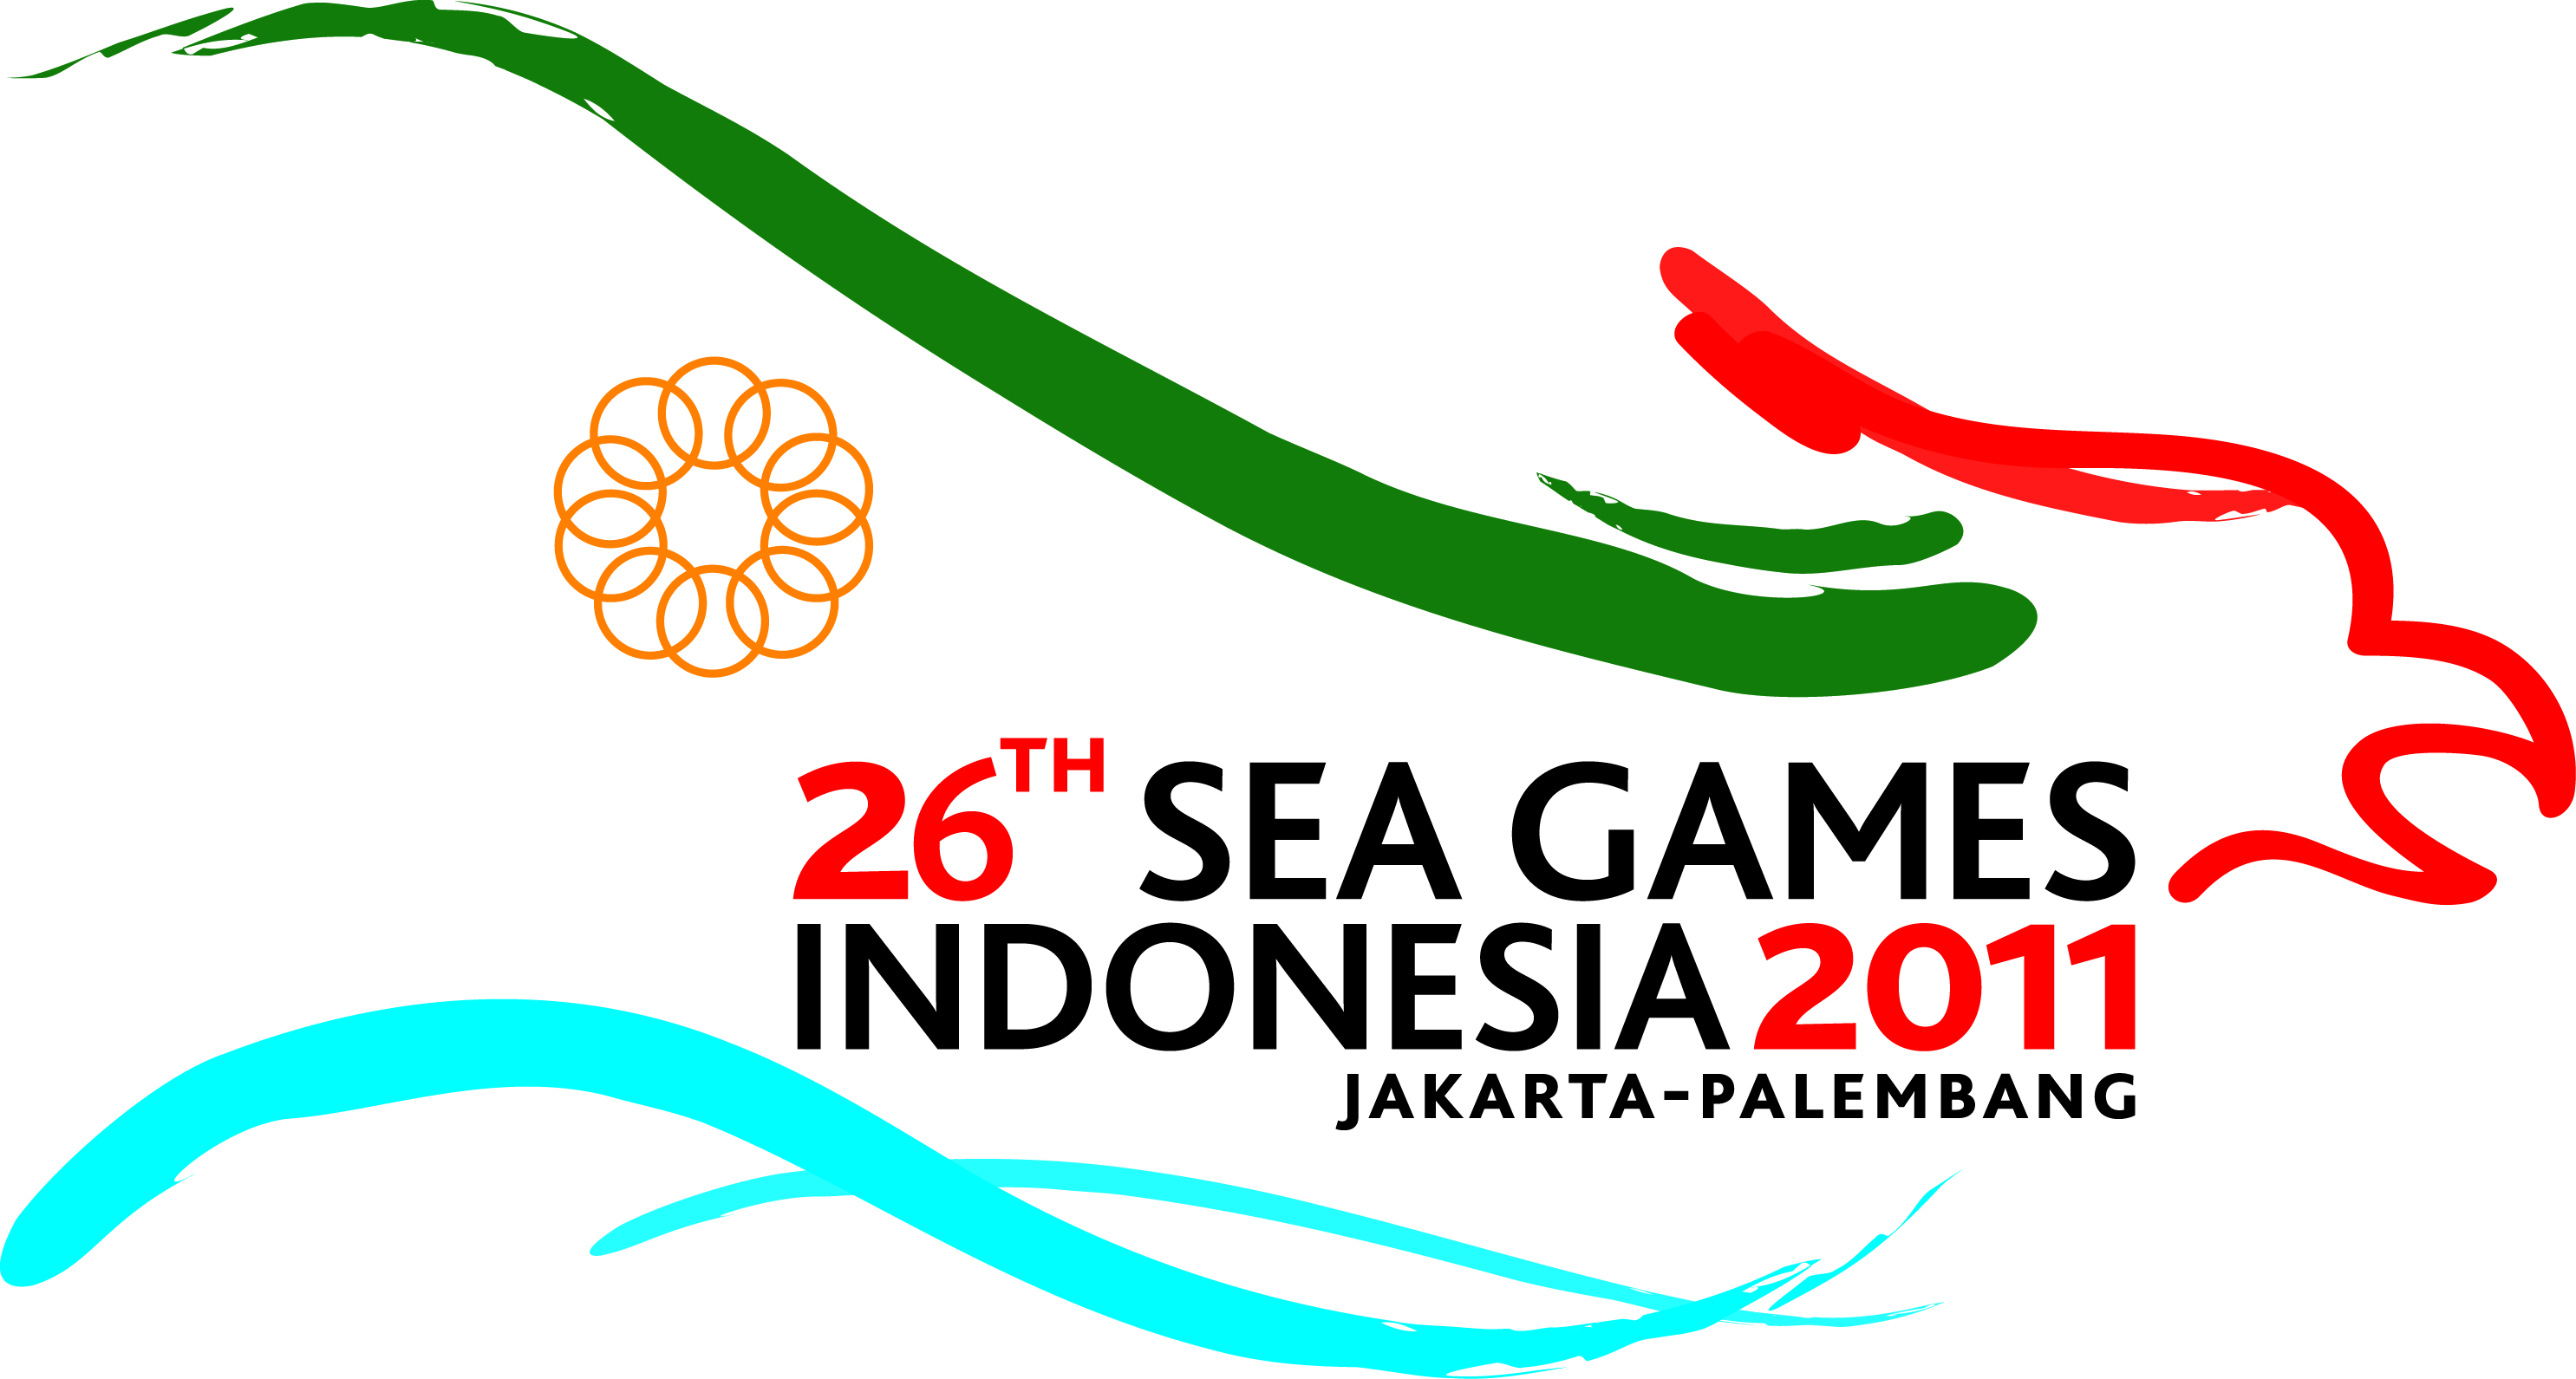 11 Days to the SEA Games 2011! | SingaSports.com